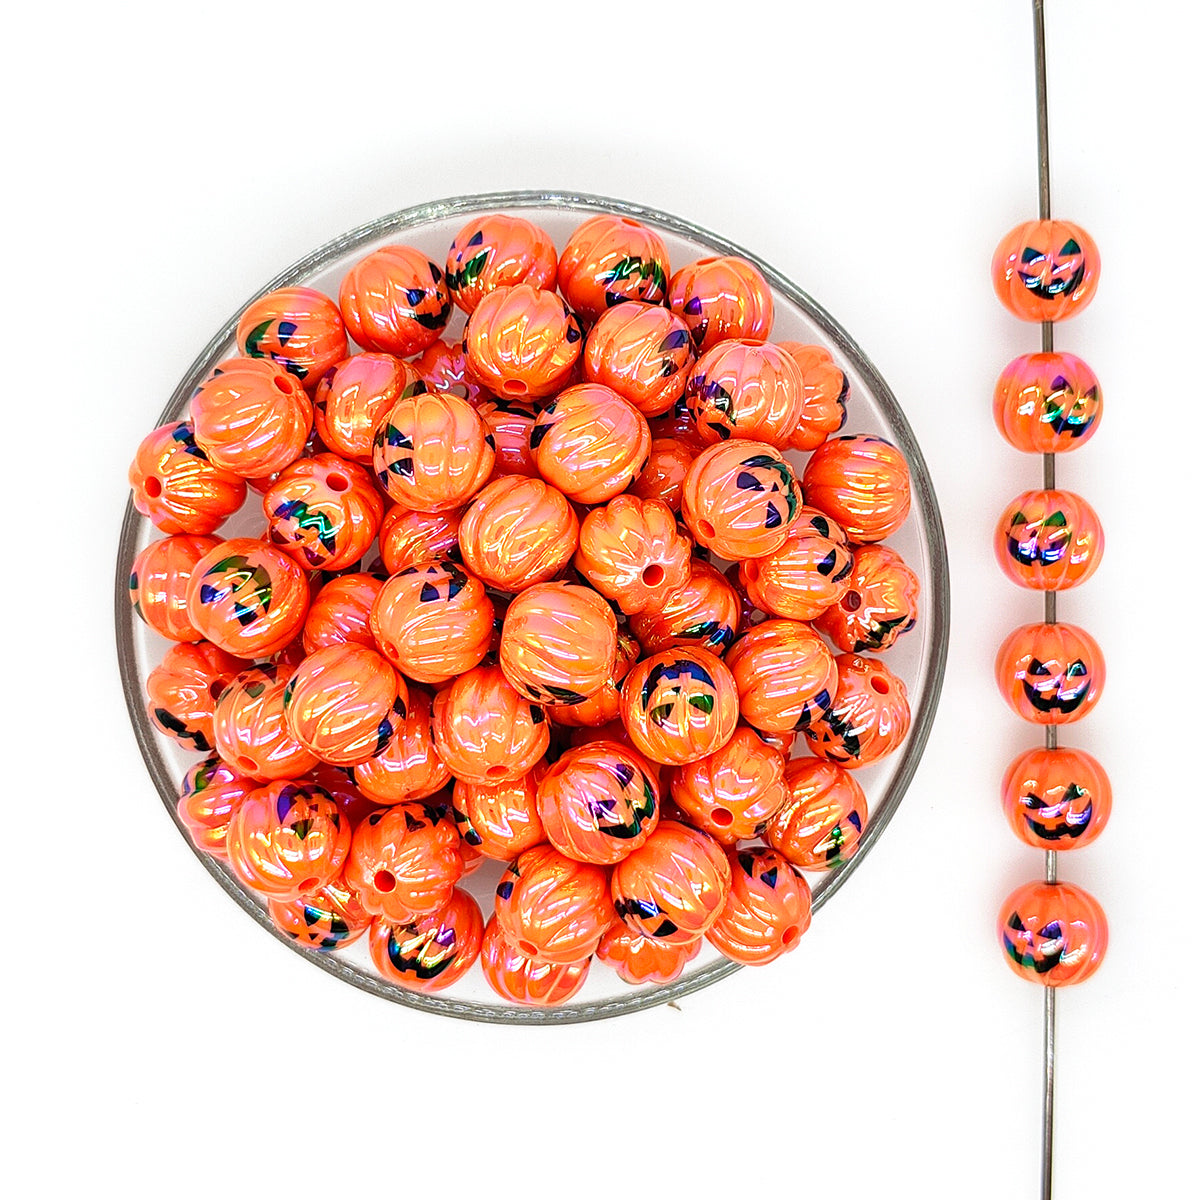 16mm Halloween Pumpkin Acrylic Gumball Beads